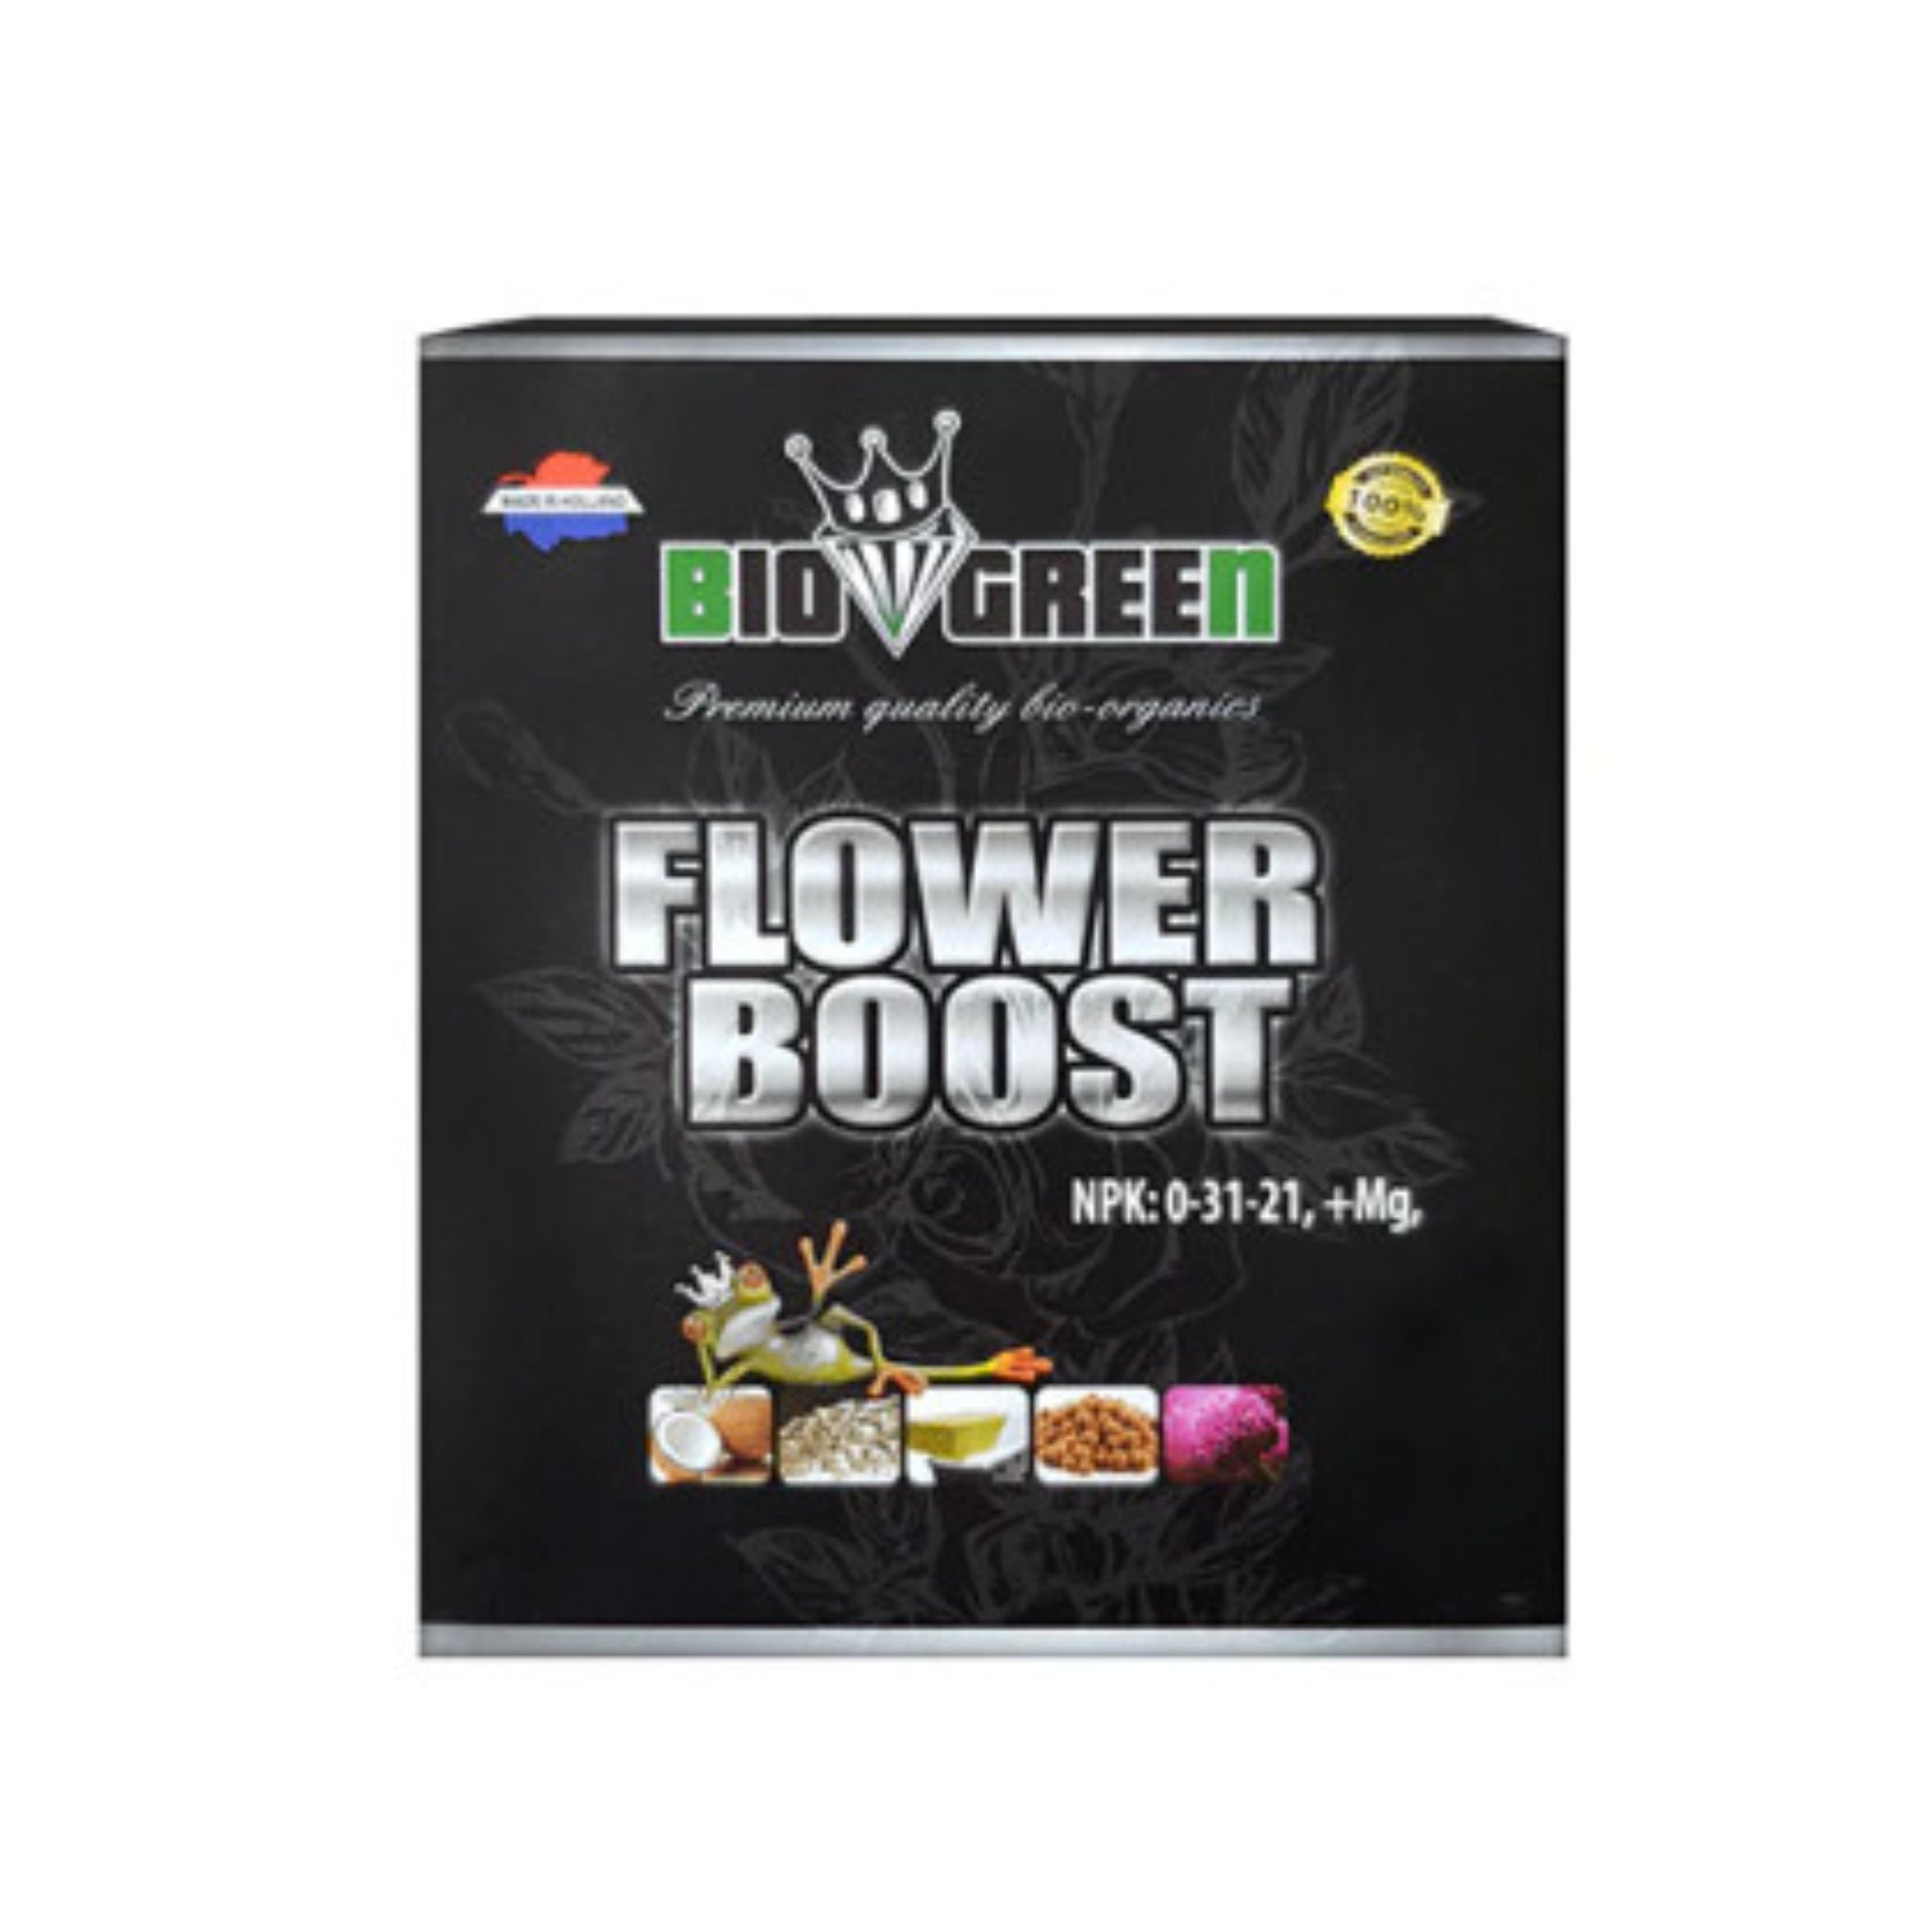 Biogreen Flower Boost (Box of 6 75g sachets)